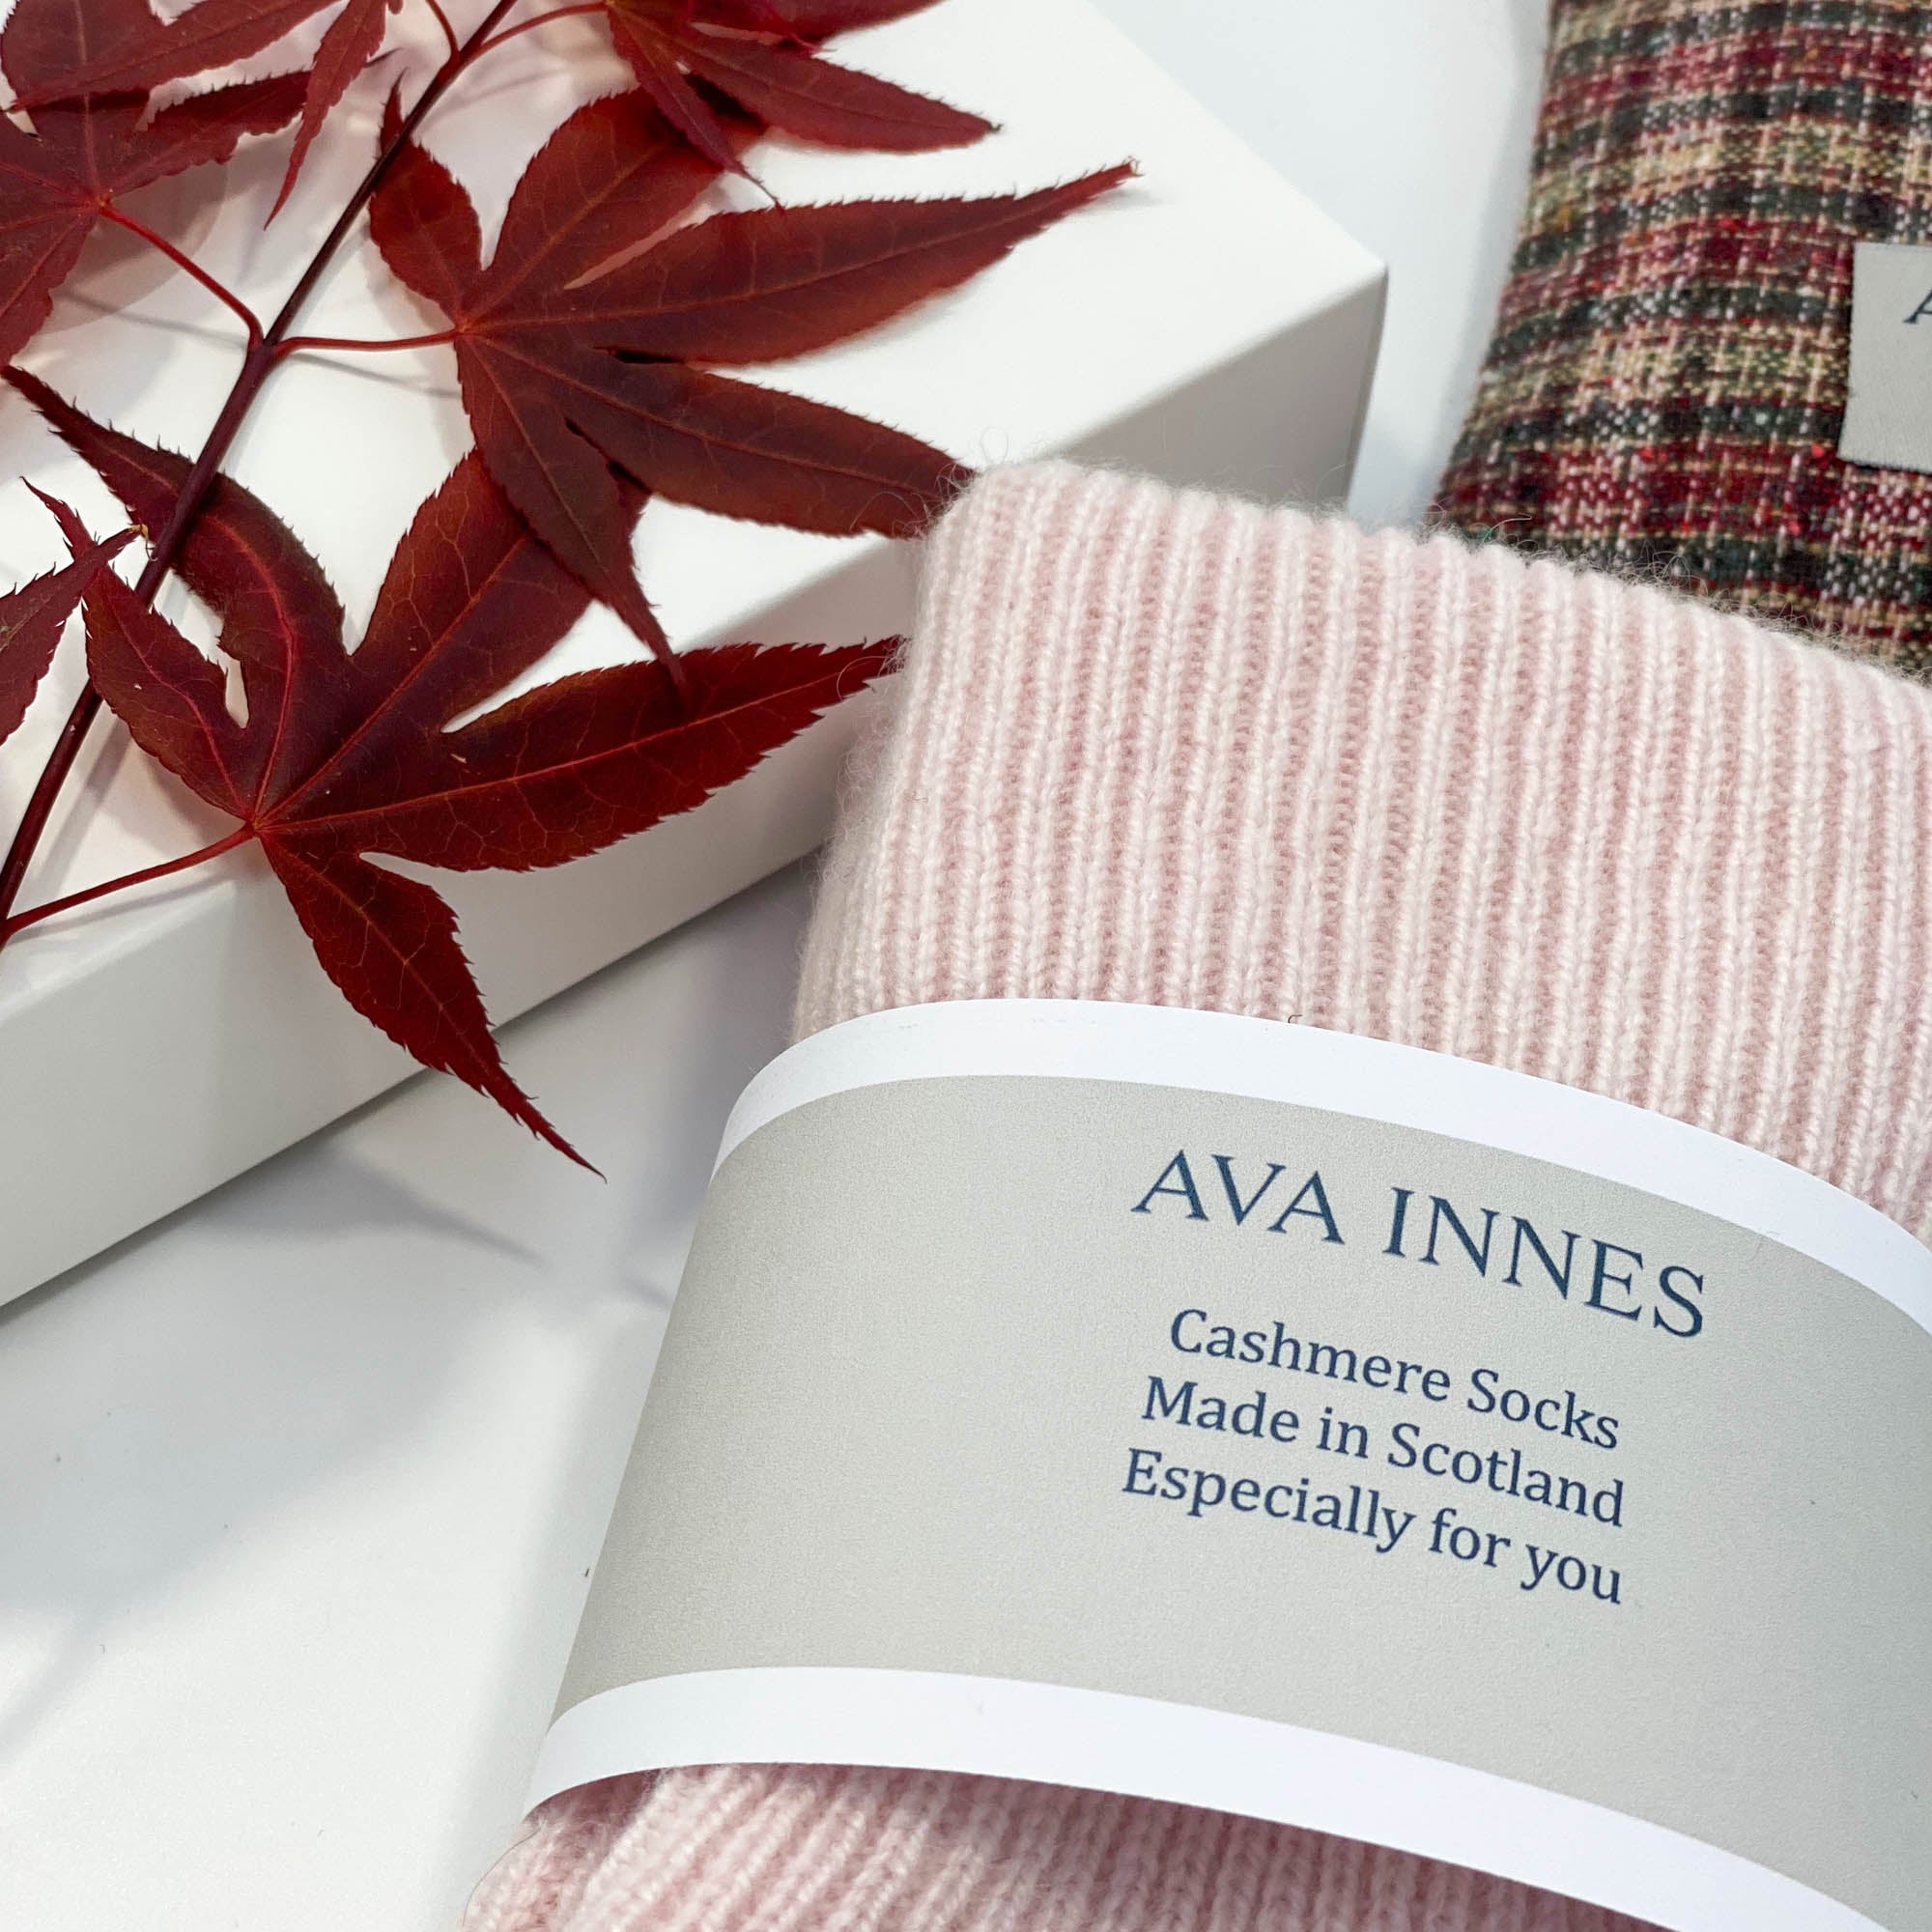 Ava Innes Relax Cashmere Gift Box, Scotland